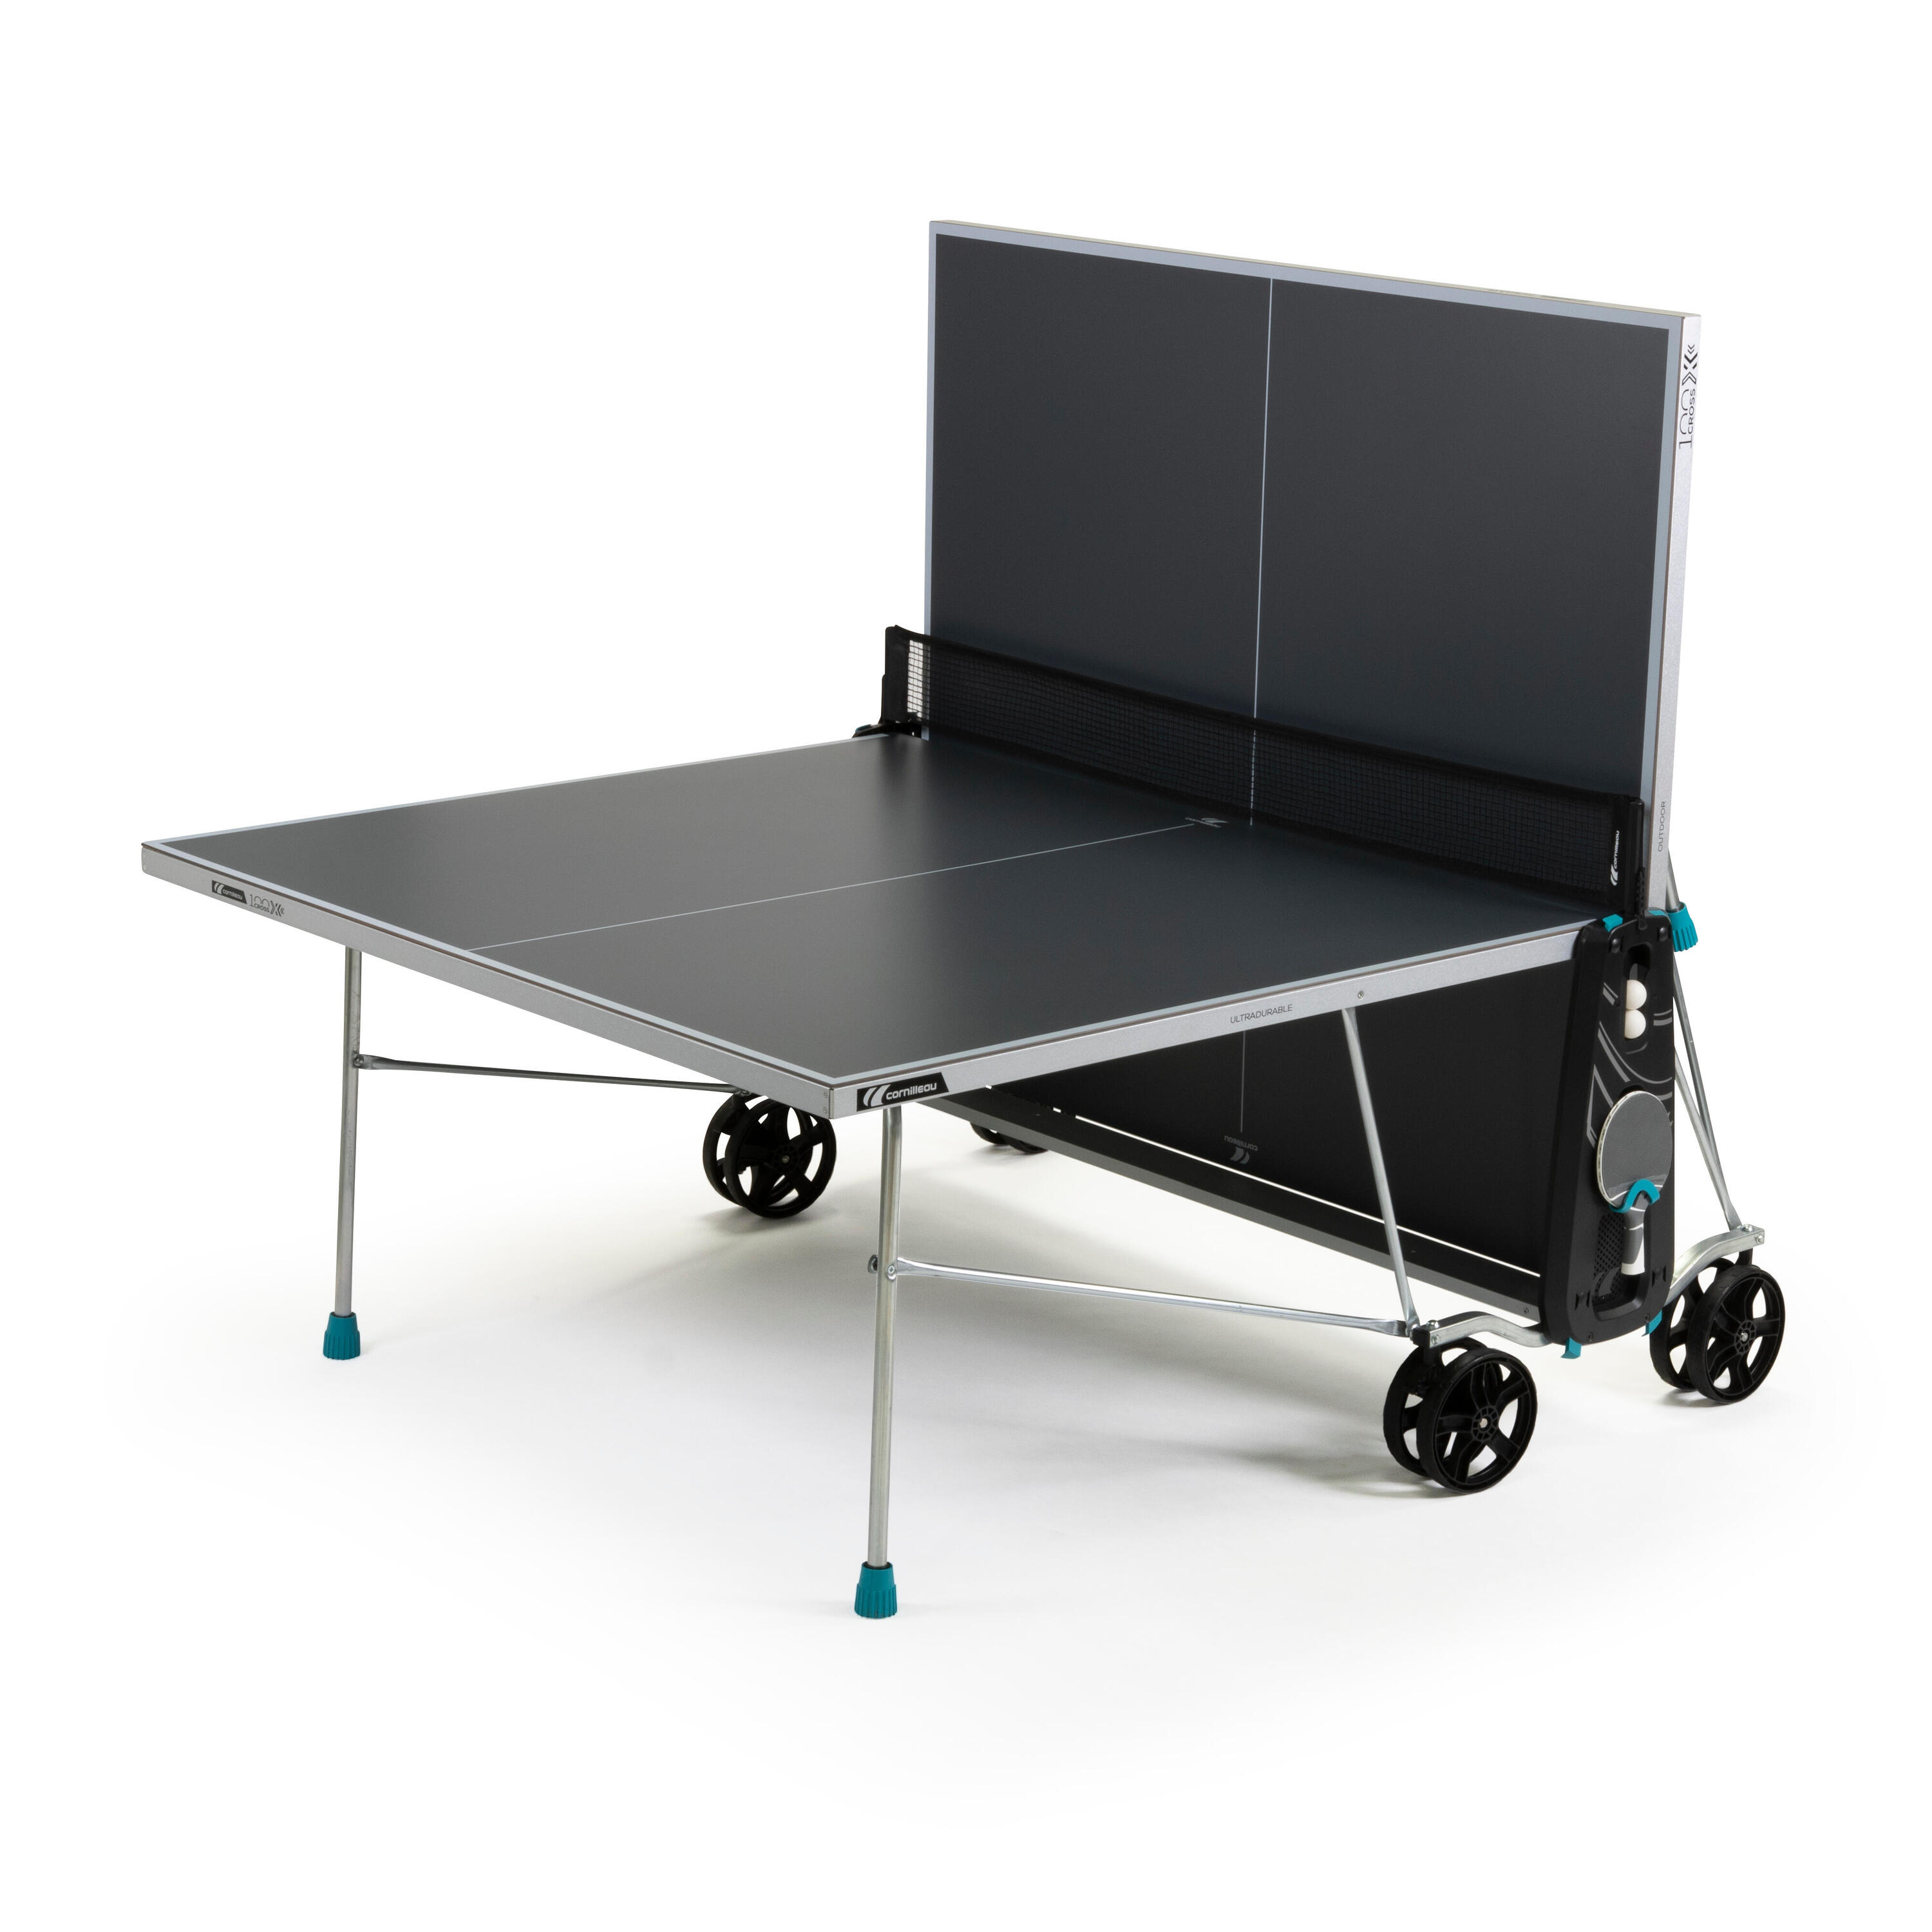 Outdoor Table Tennis Table 100X - Grey 2/17